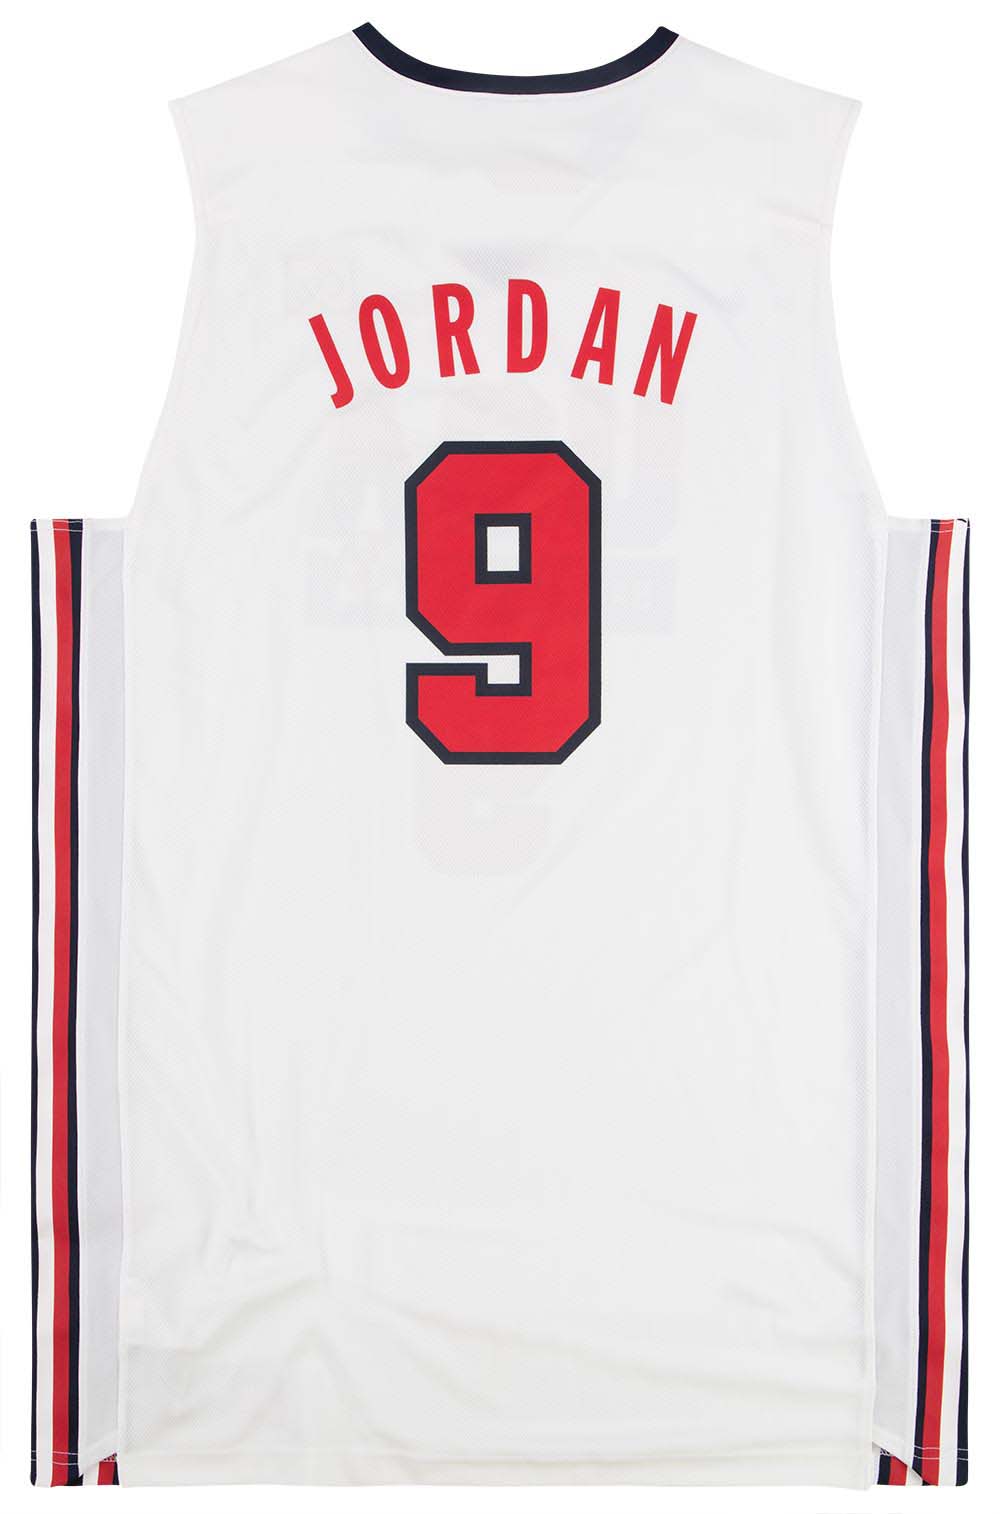 Michael Jordan Nike USA Basketball Jersey #9 White Mens Size Small